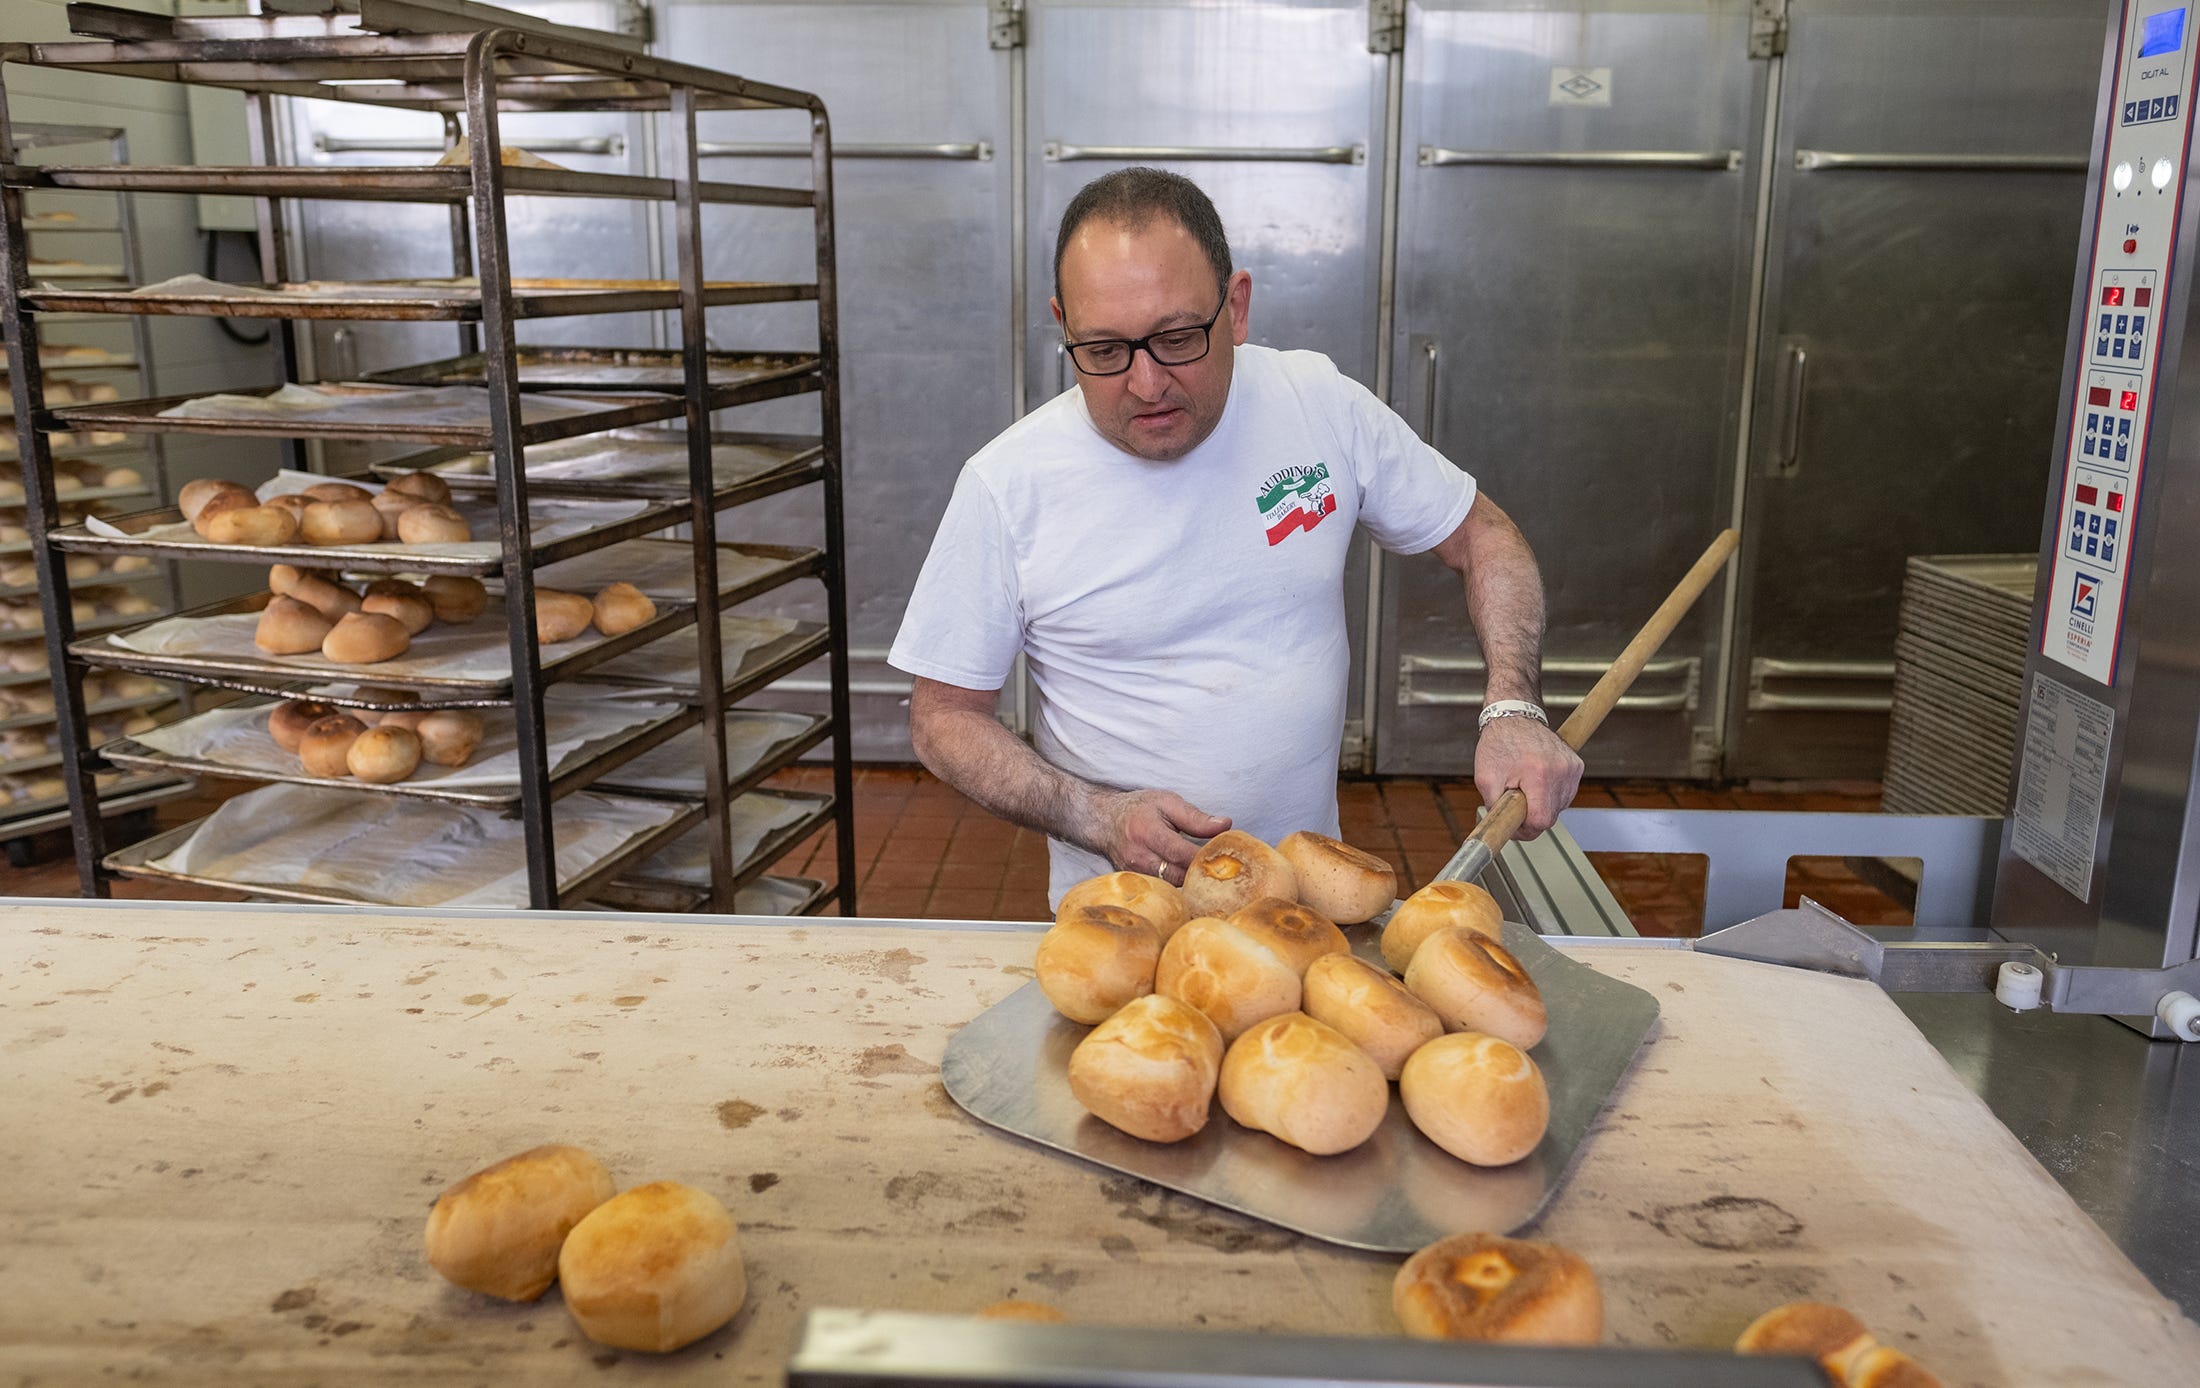 Marco Auddino pulls freshly baked buns from one of the ovens at Auddino’s Italian Bakery.